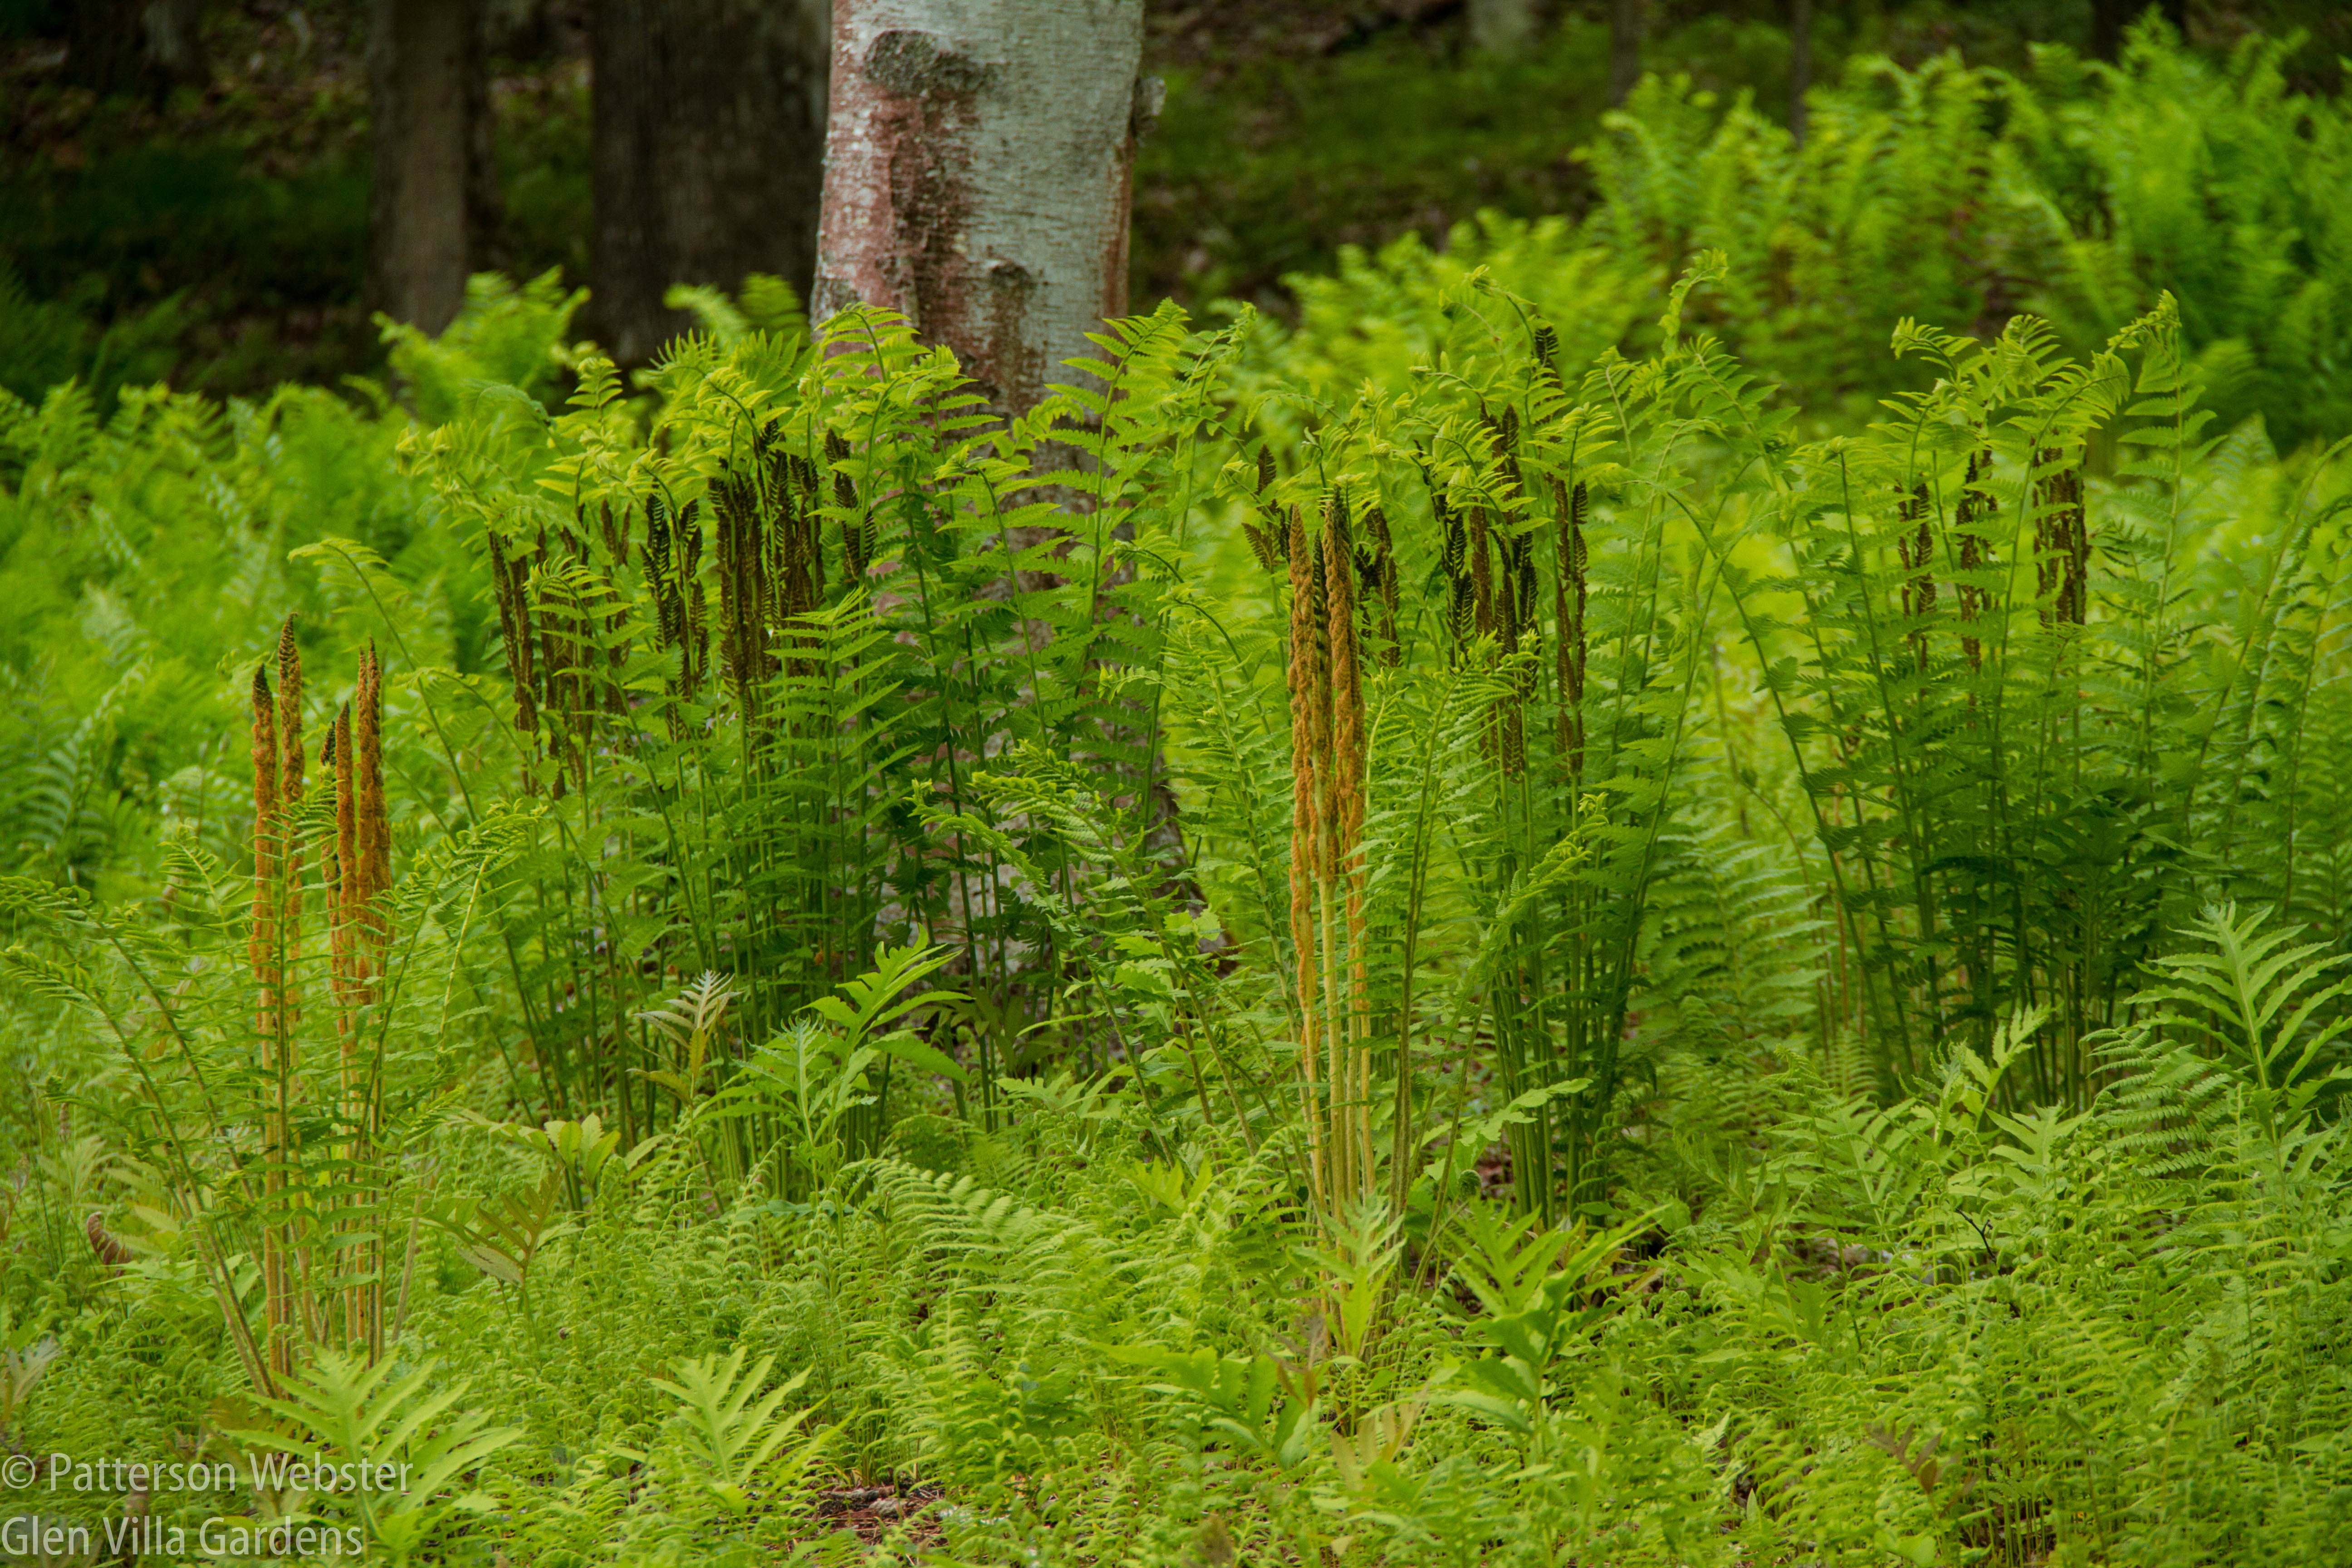 Cinnamon ferns poke their heads up.